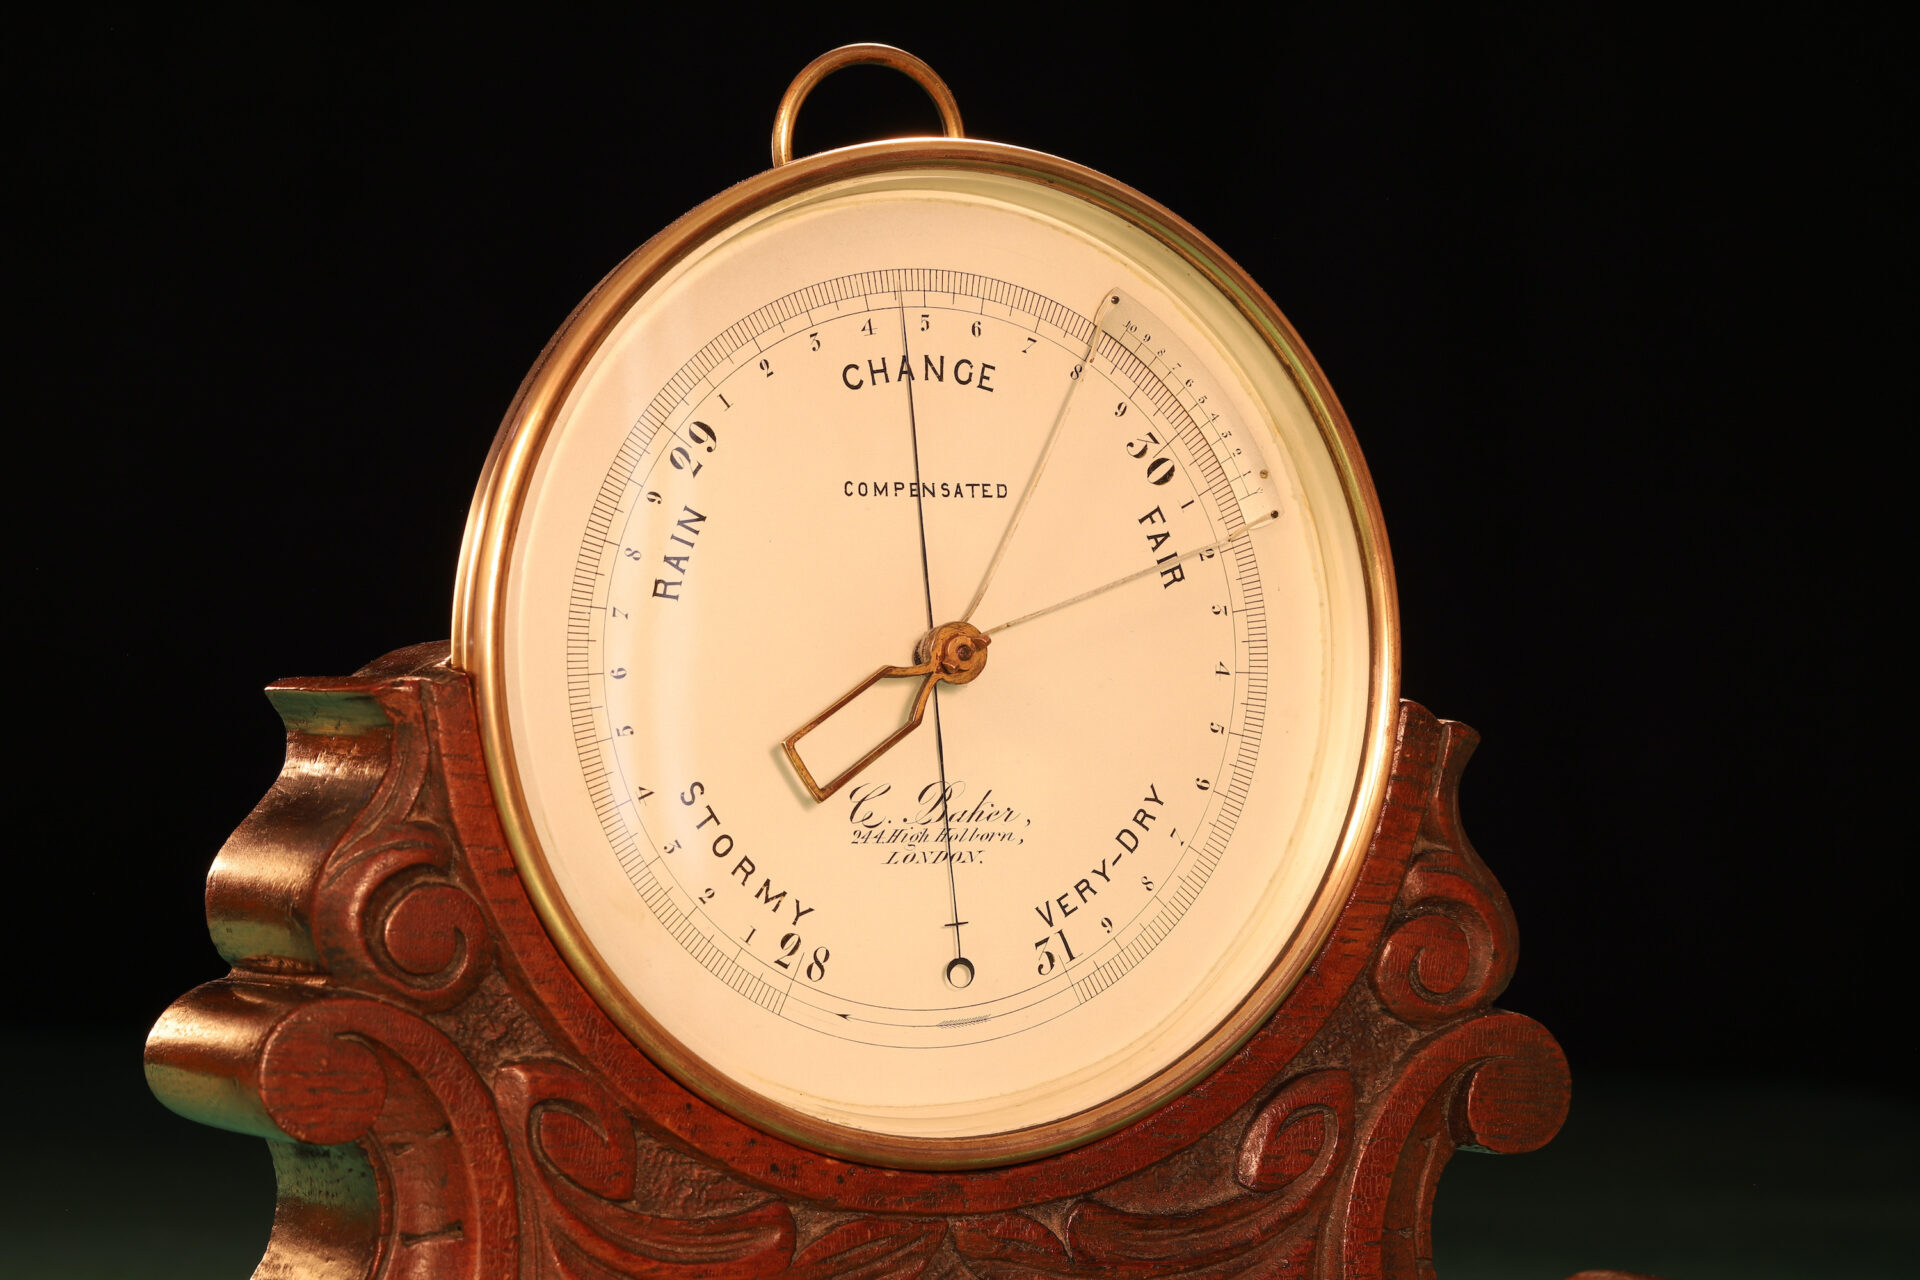 Image of dial of Charles Baker Mantle Barometer c1909 taken from lefthand side